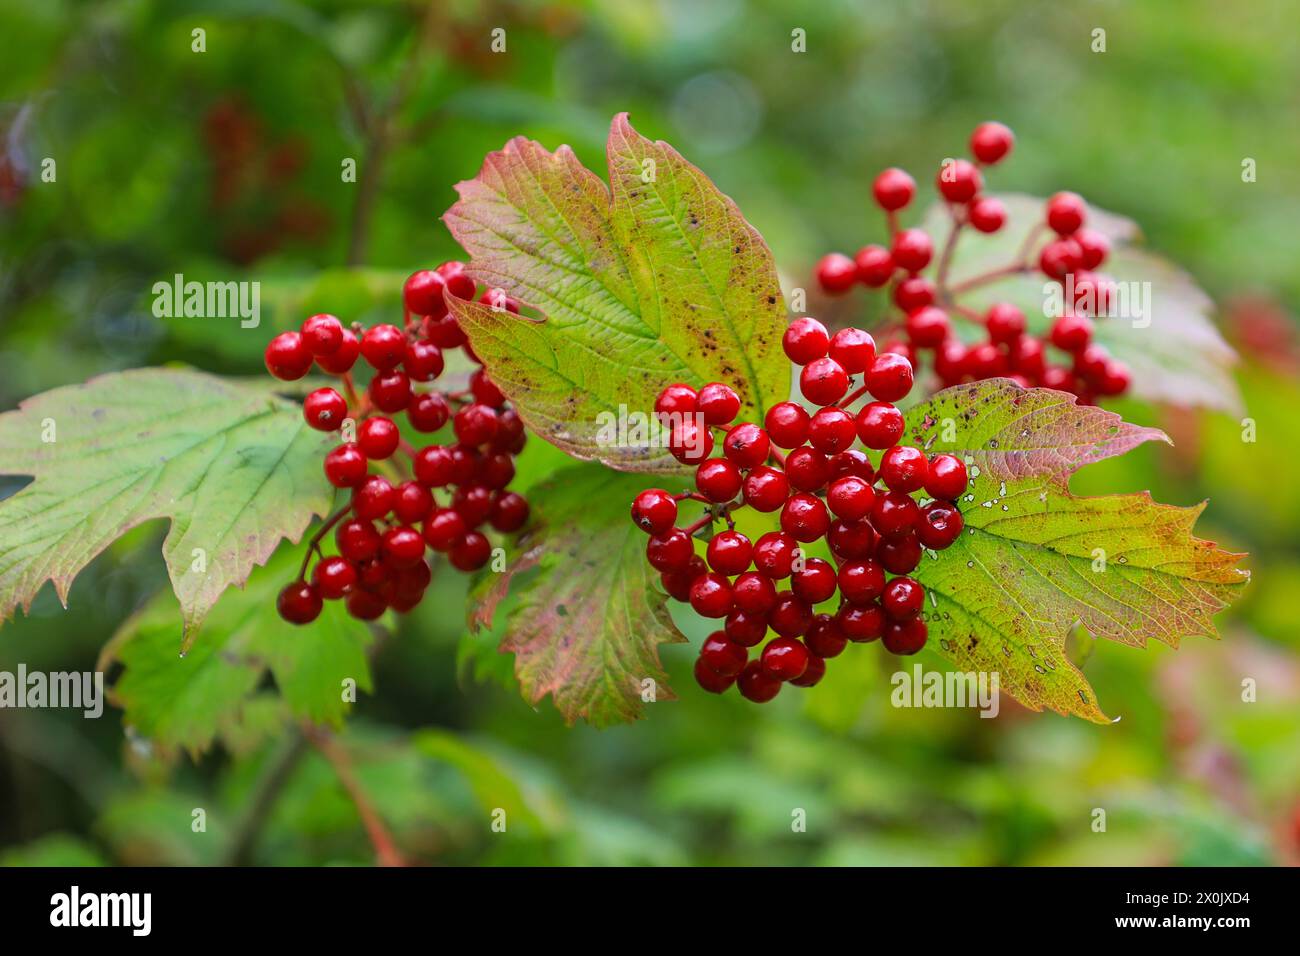 The red berries on a Viburnum bush or tree (Viburnum lantana), England, UK Stock Photo